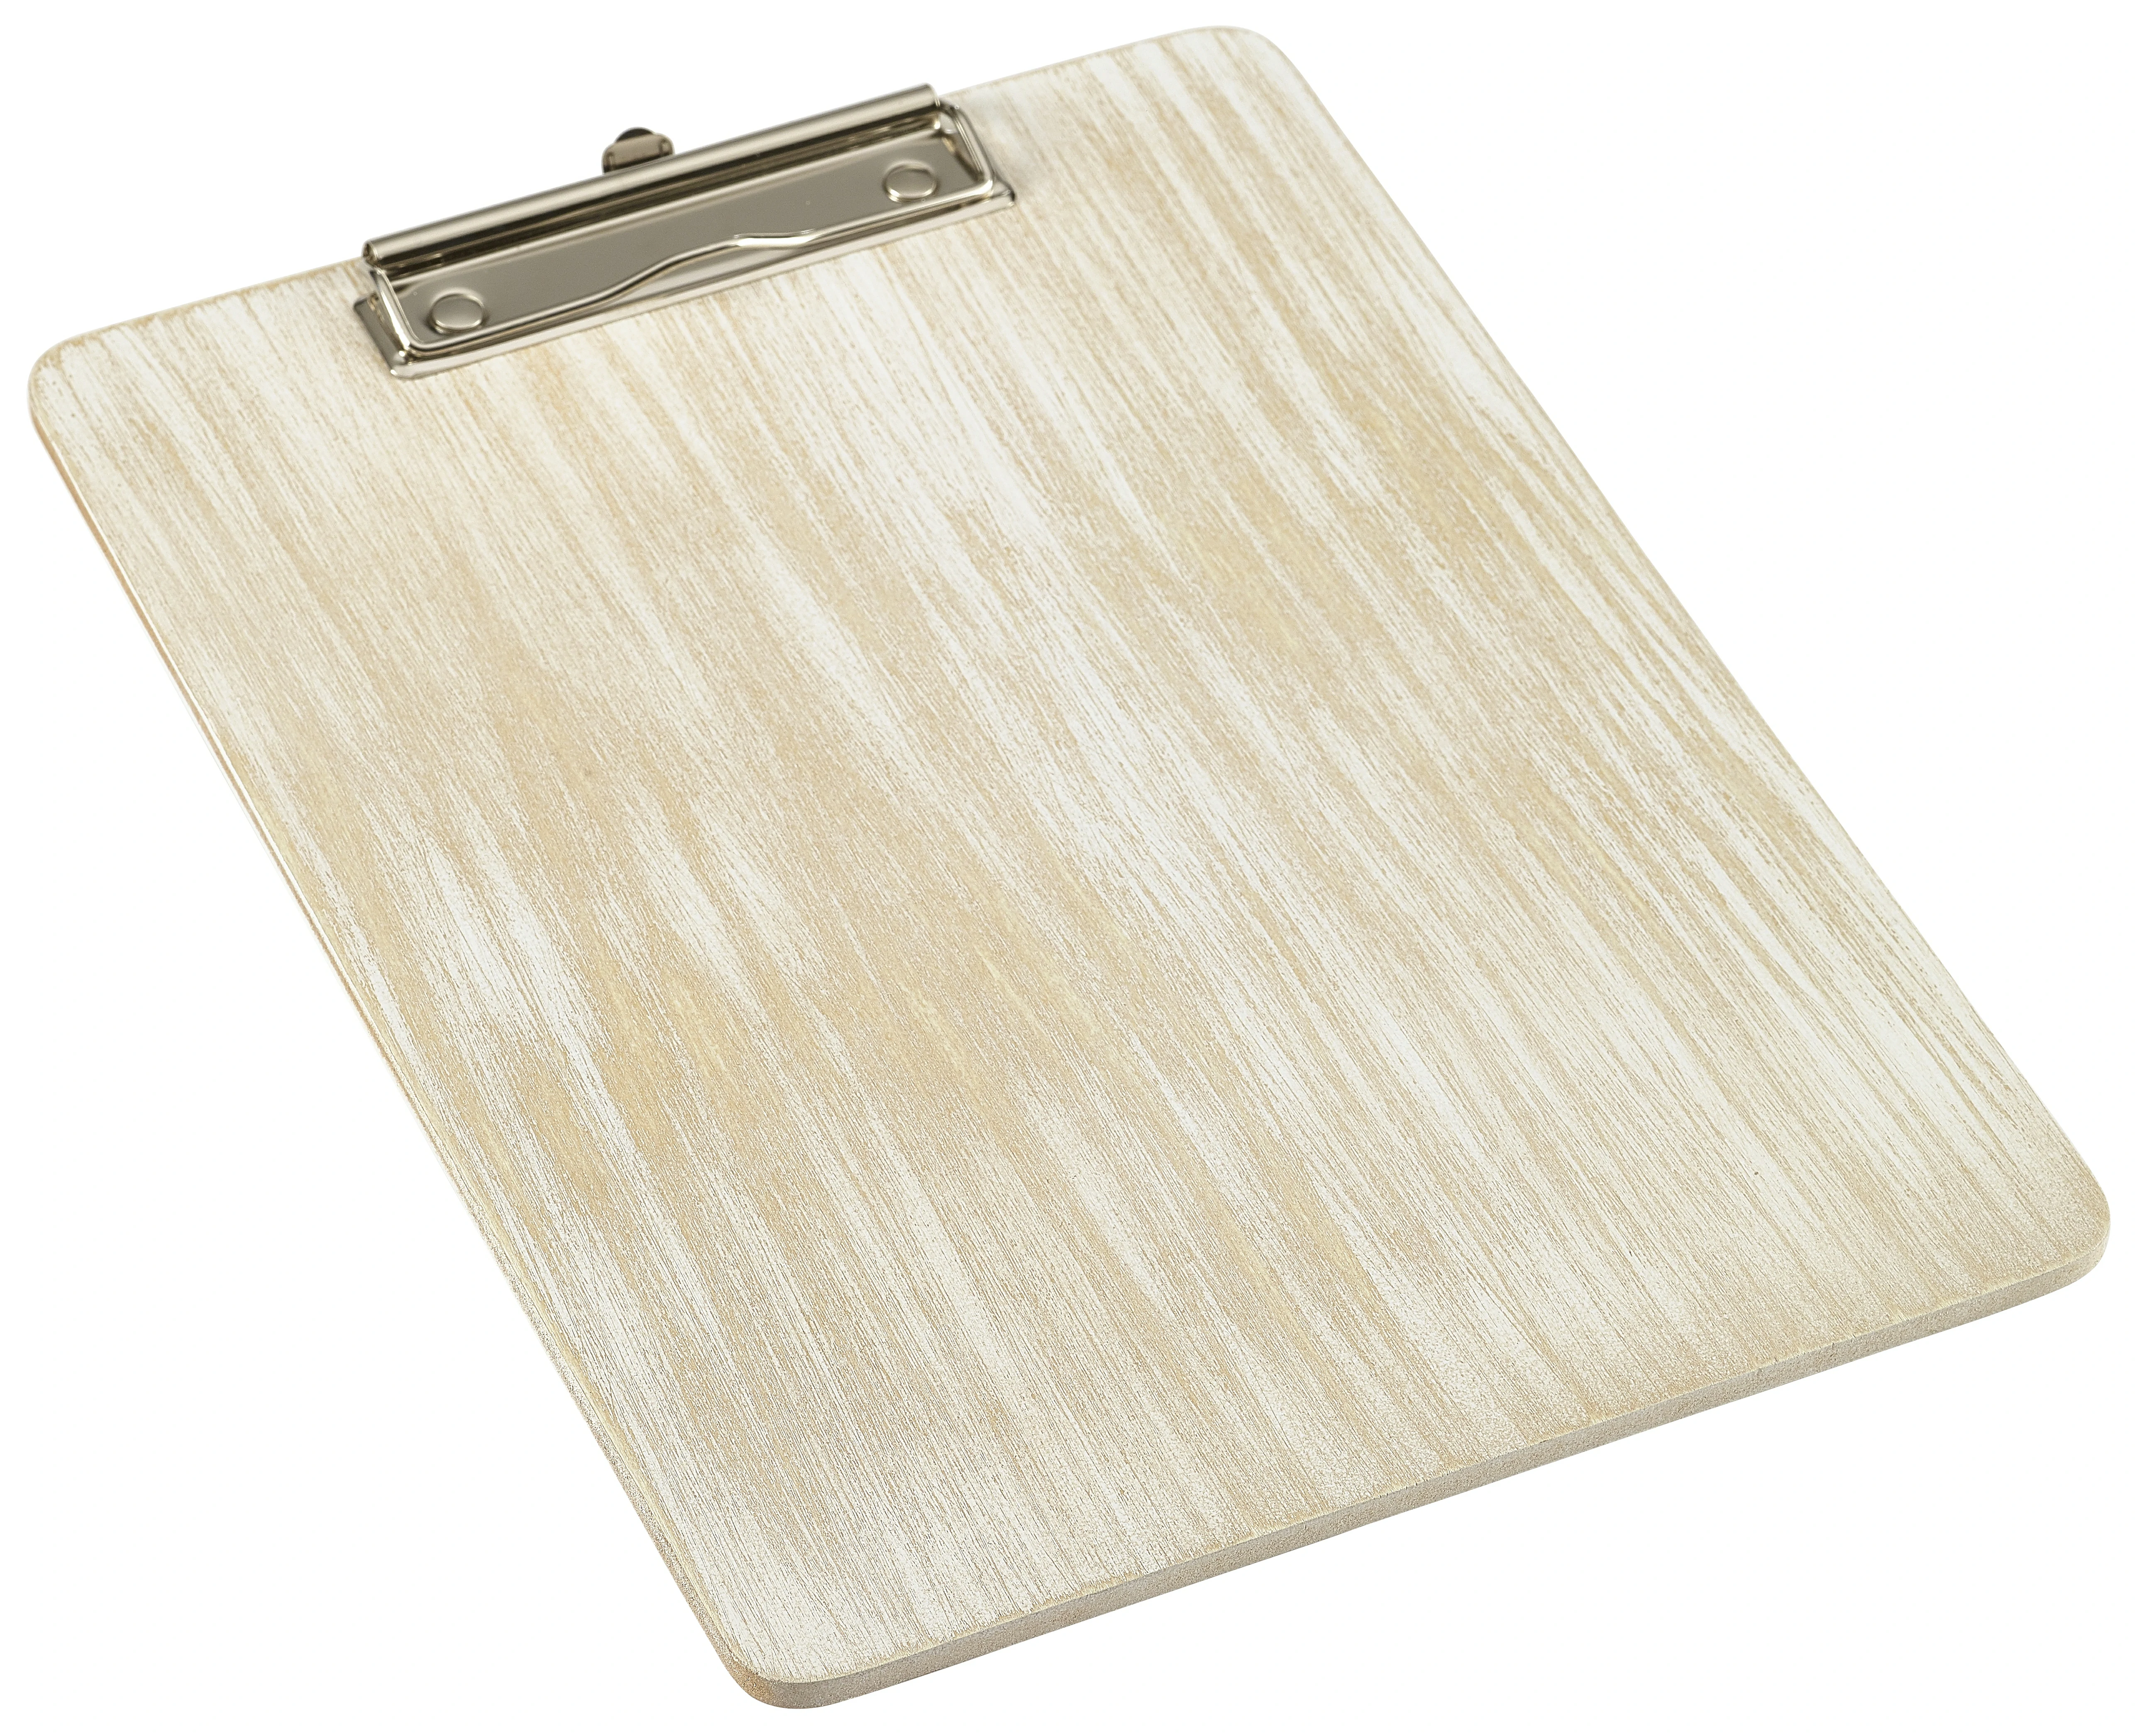 White Wash Wooden Menu Clipboard A4 24x32x0.6cm